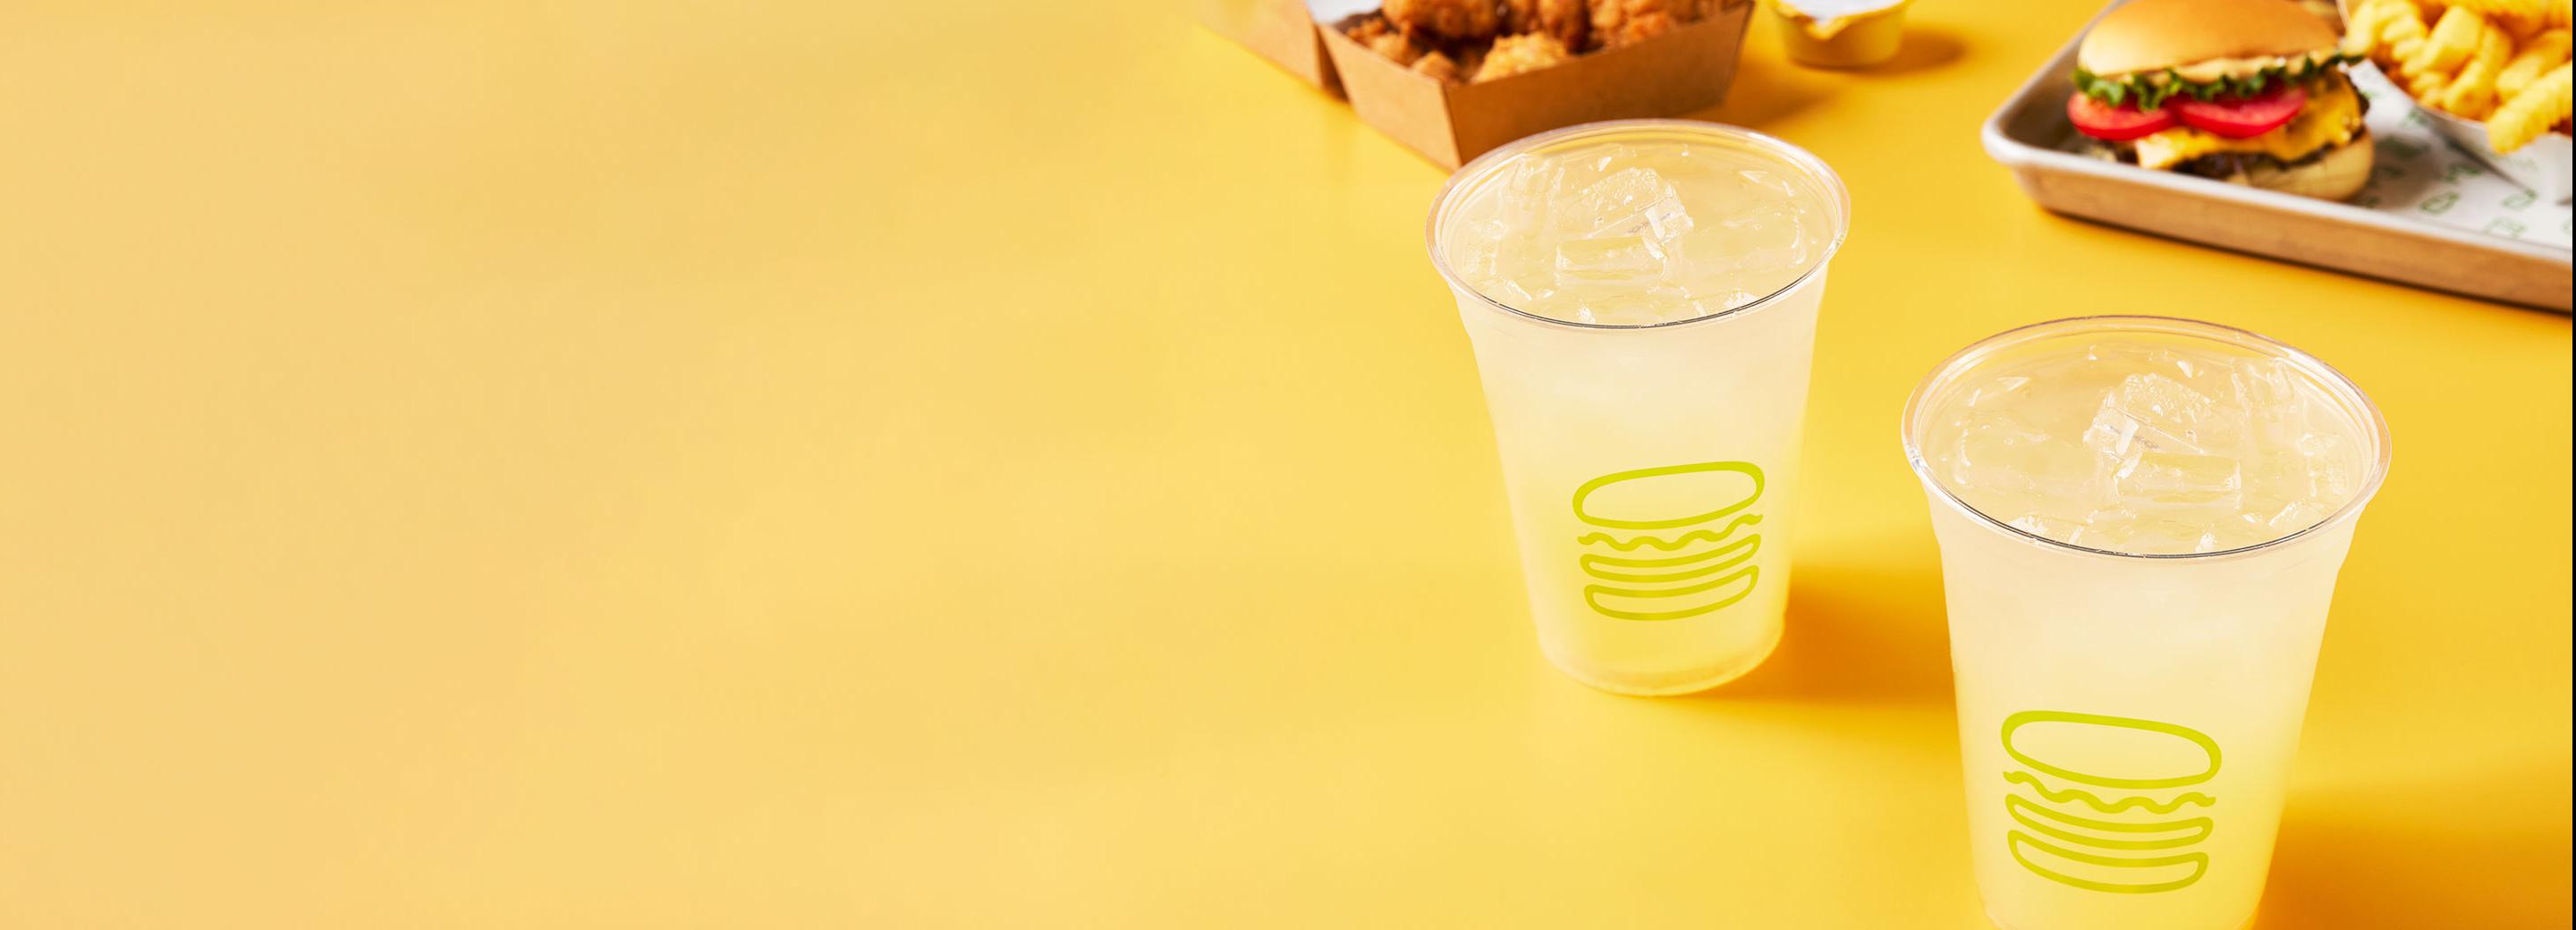 Buy one lemonade, get a second lemonade free